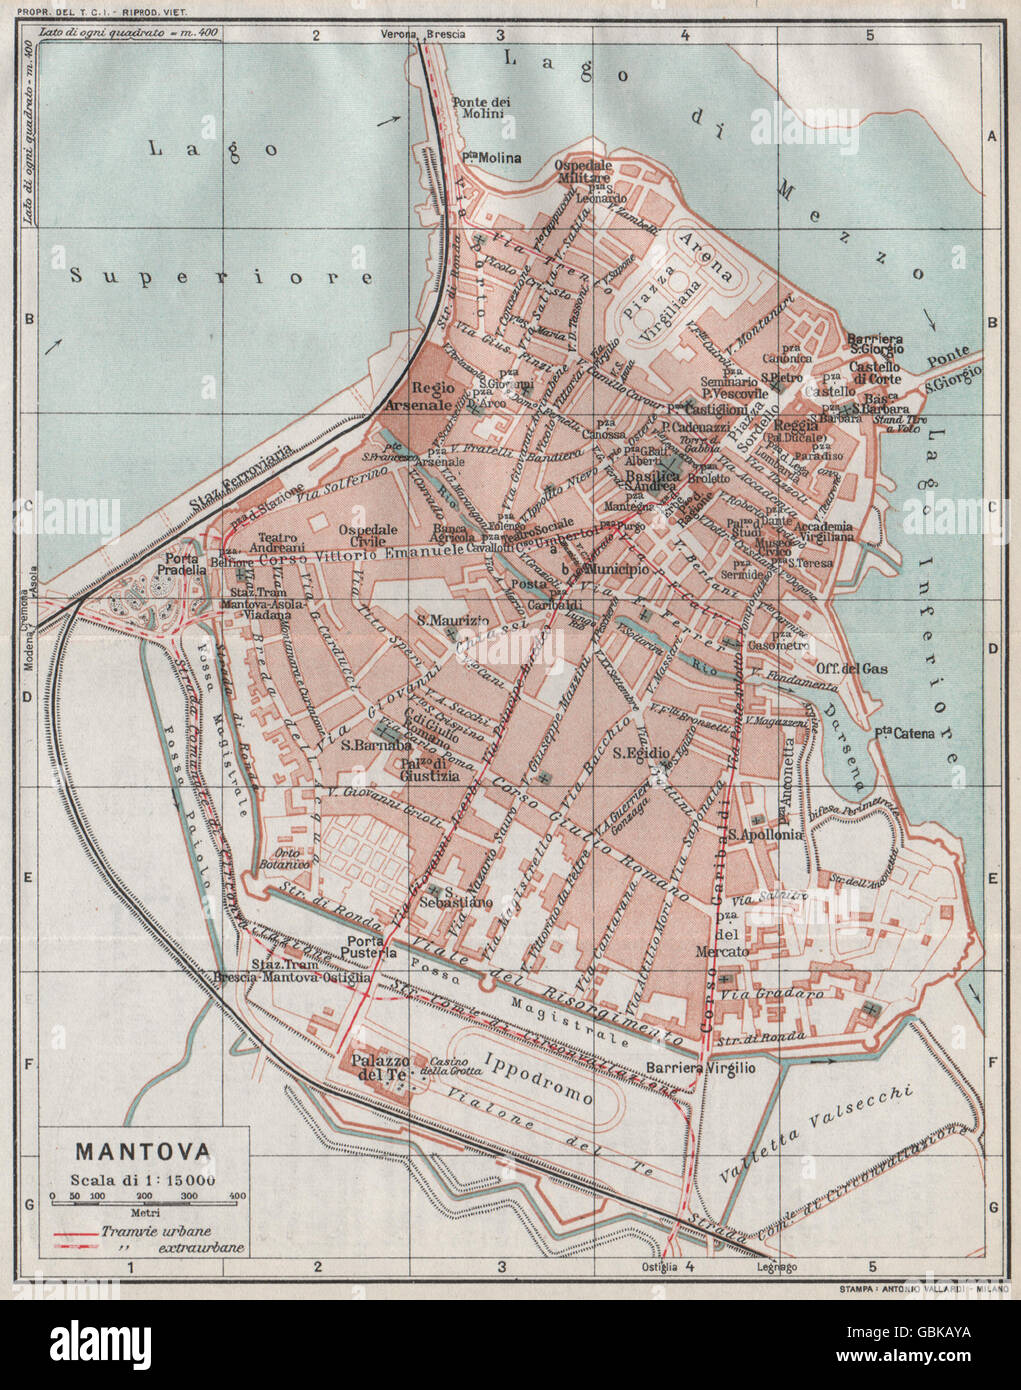 MANTOVA (MANTUA) . Vintage town city map plan. Italy, 1924 Stock Photo -  Alamy